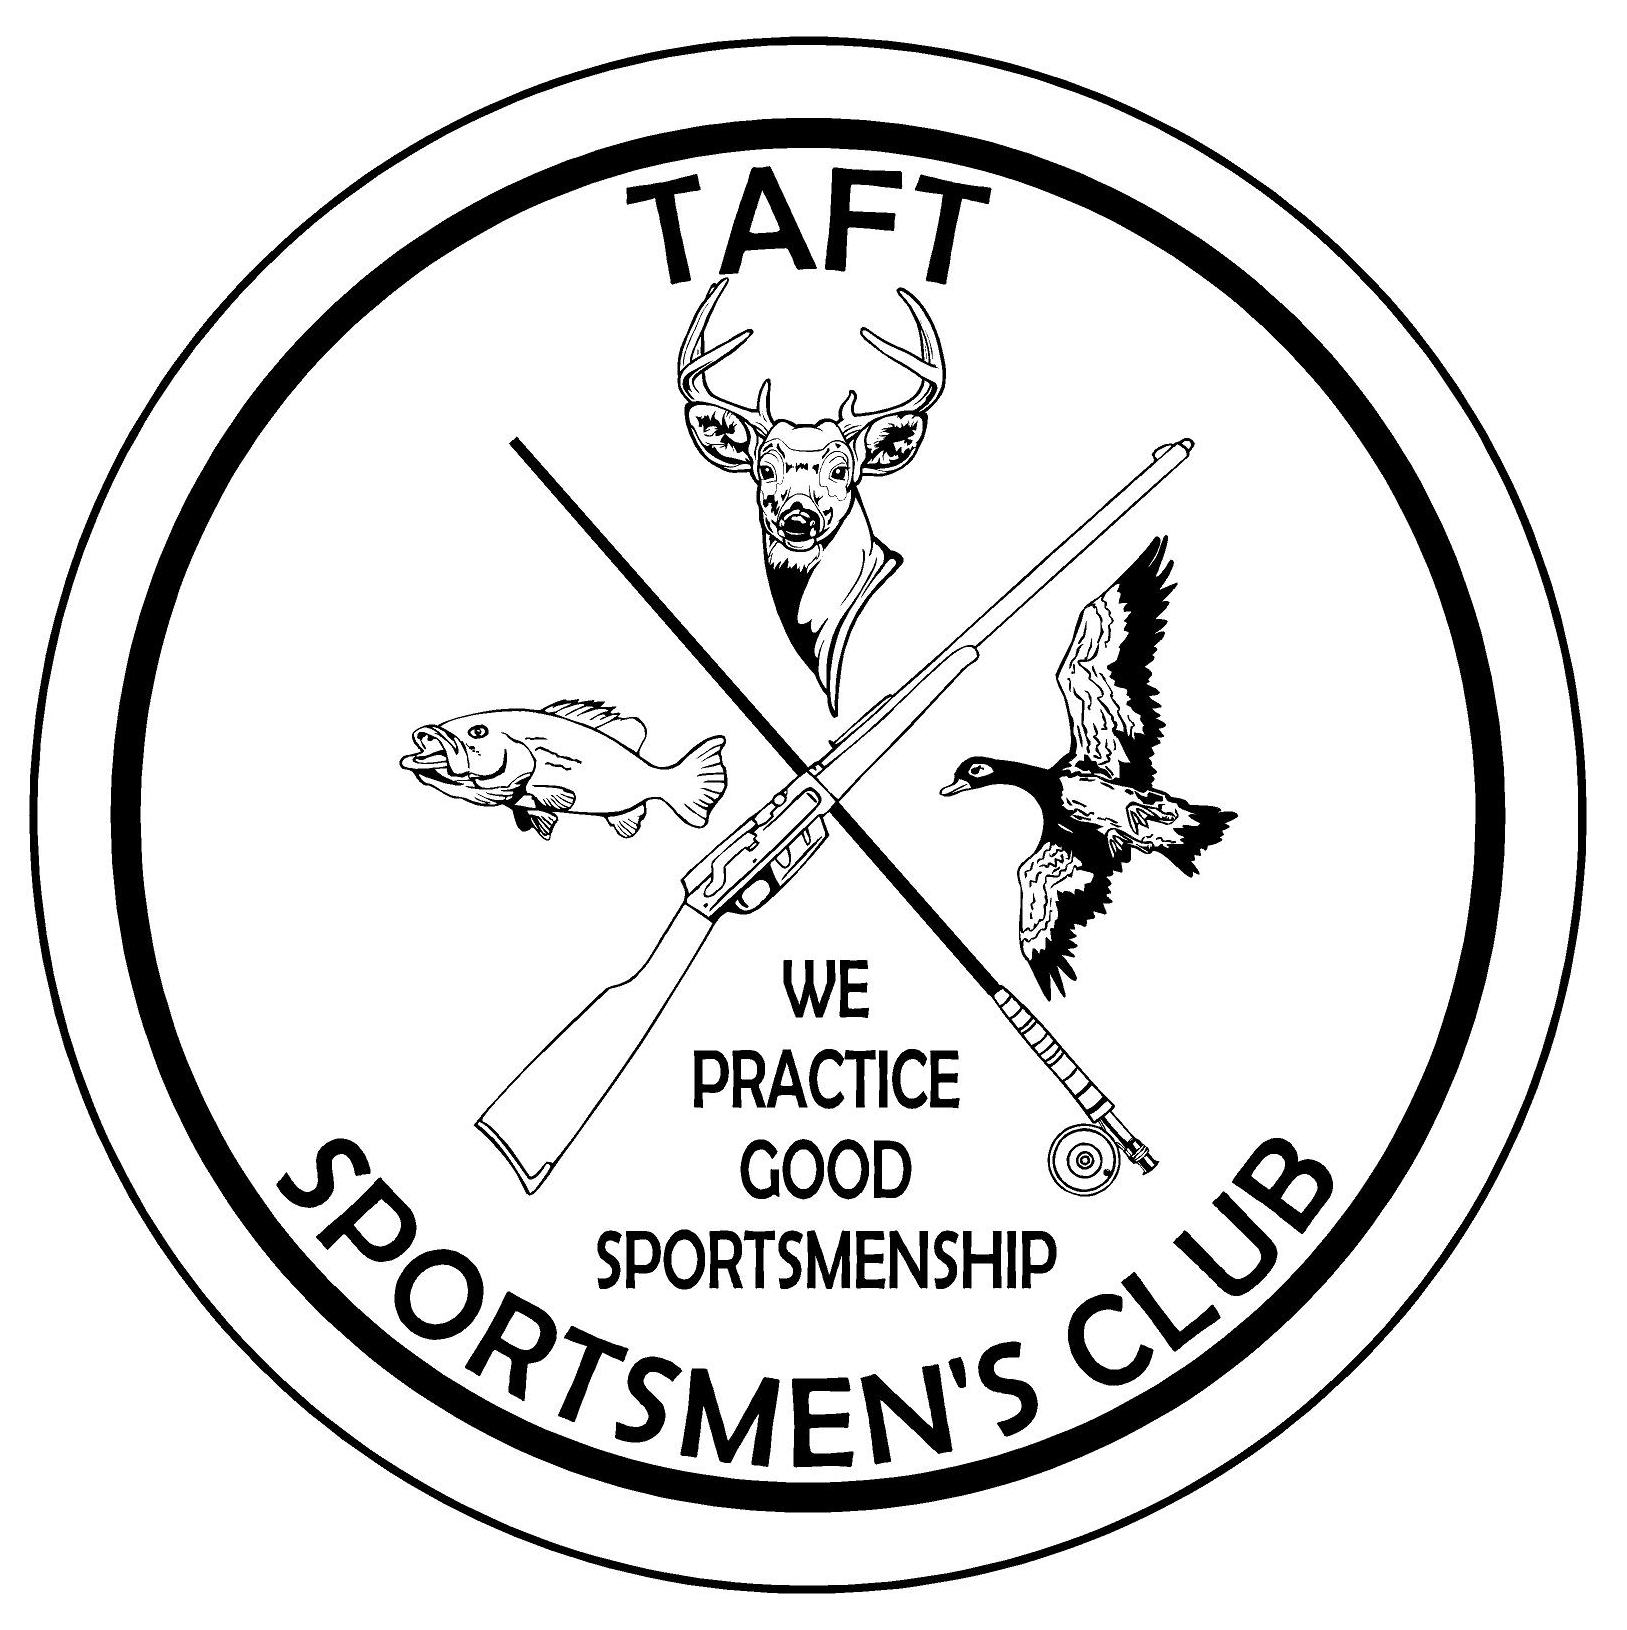 Taft Sportsmen's Club